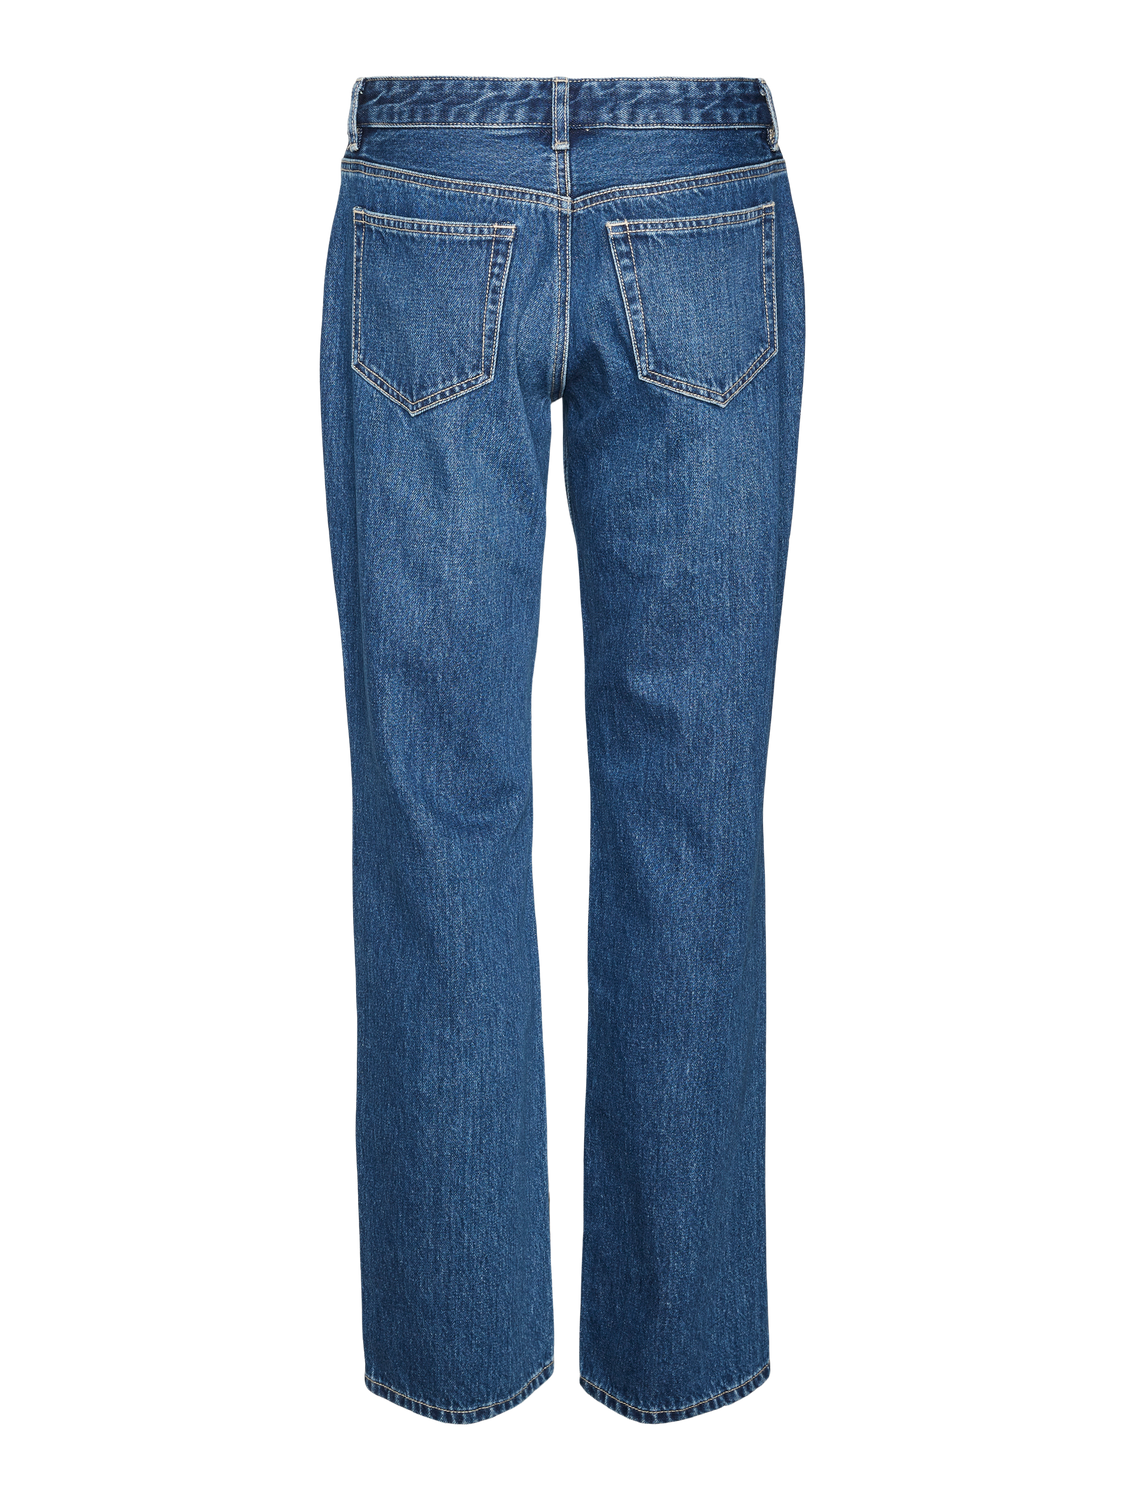 VMPAM Jeans - Medium Blue Denim